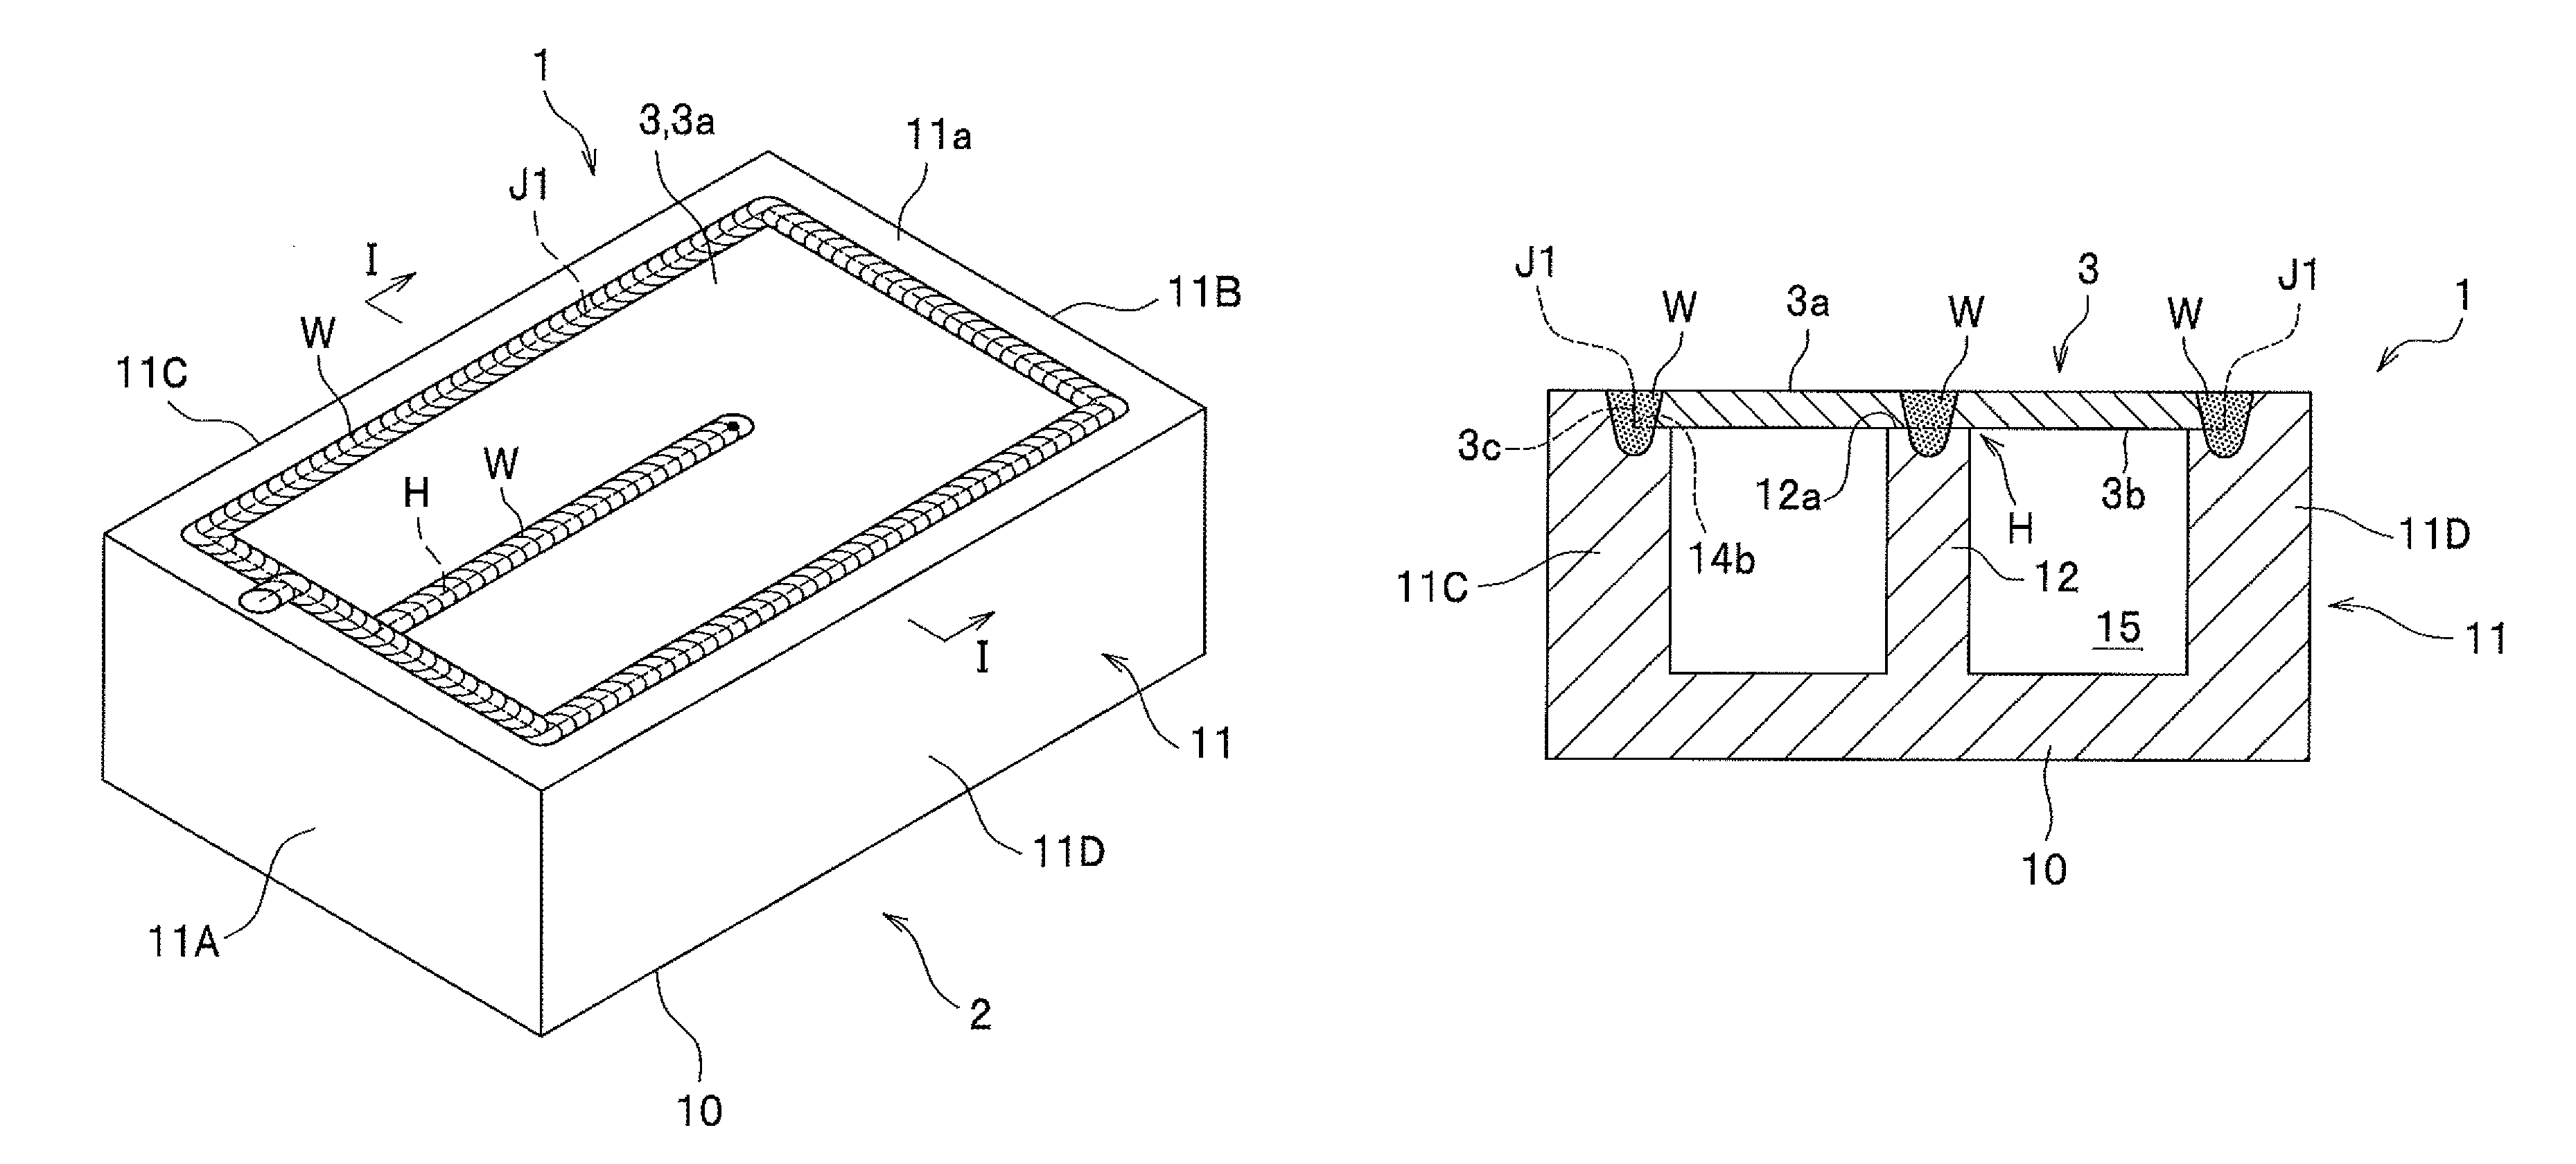 Method of manufacturing liquid-cooled jacket